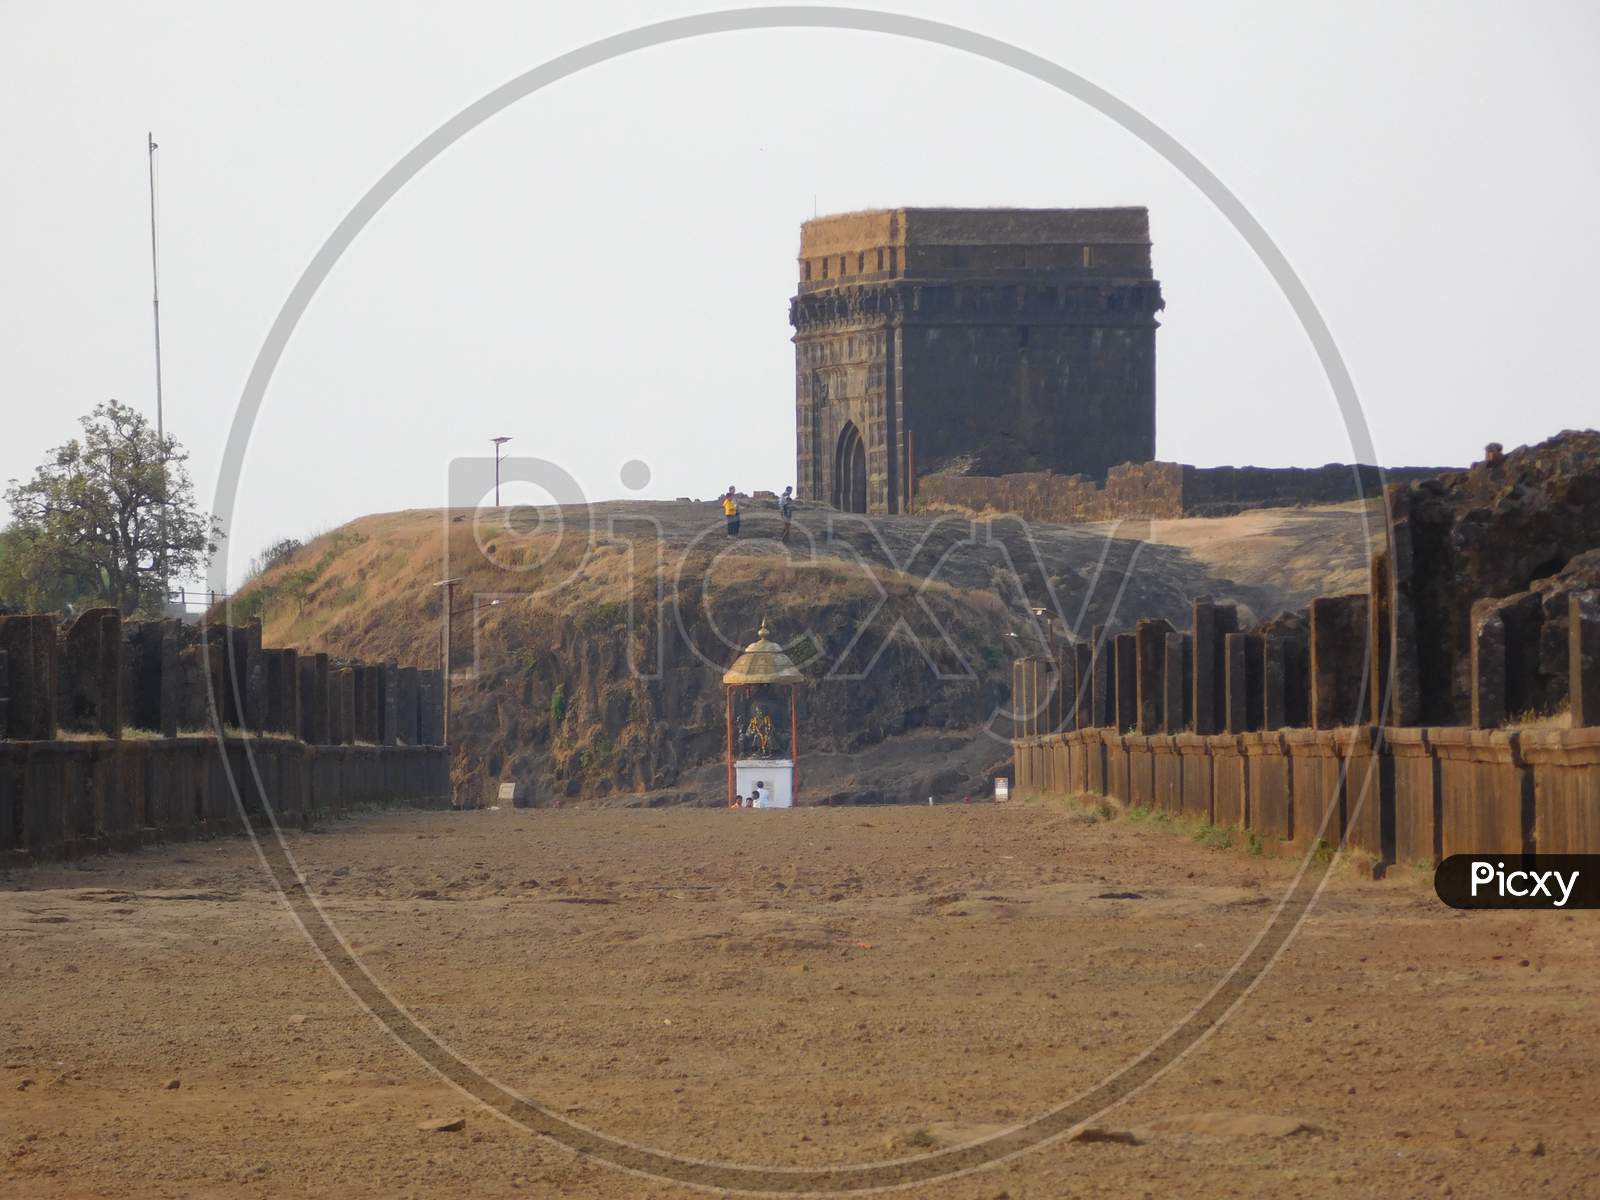 Capital of Maratha Empire - Raigad Fort